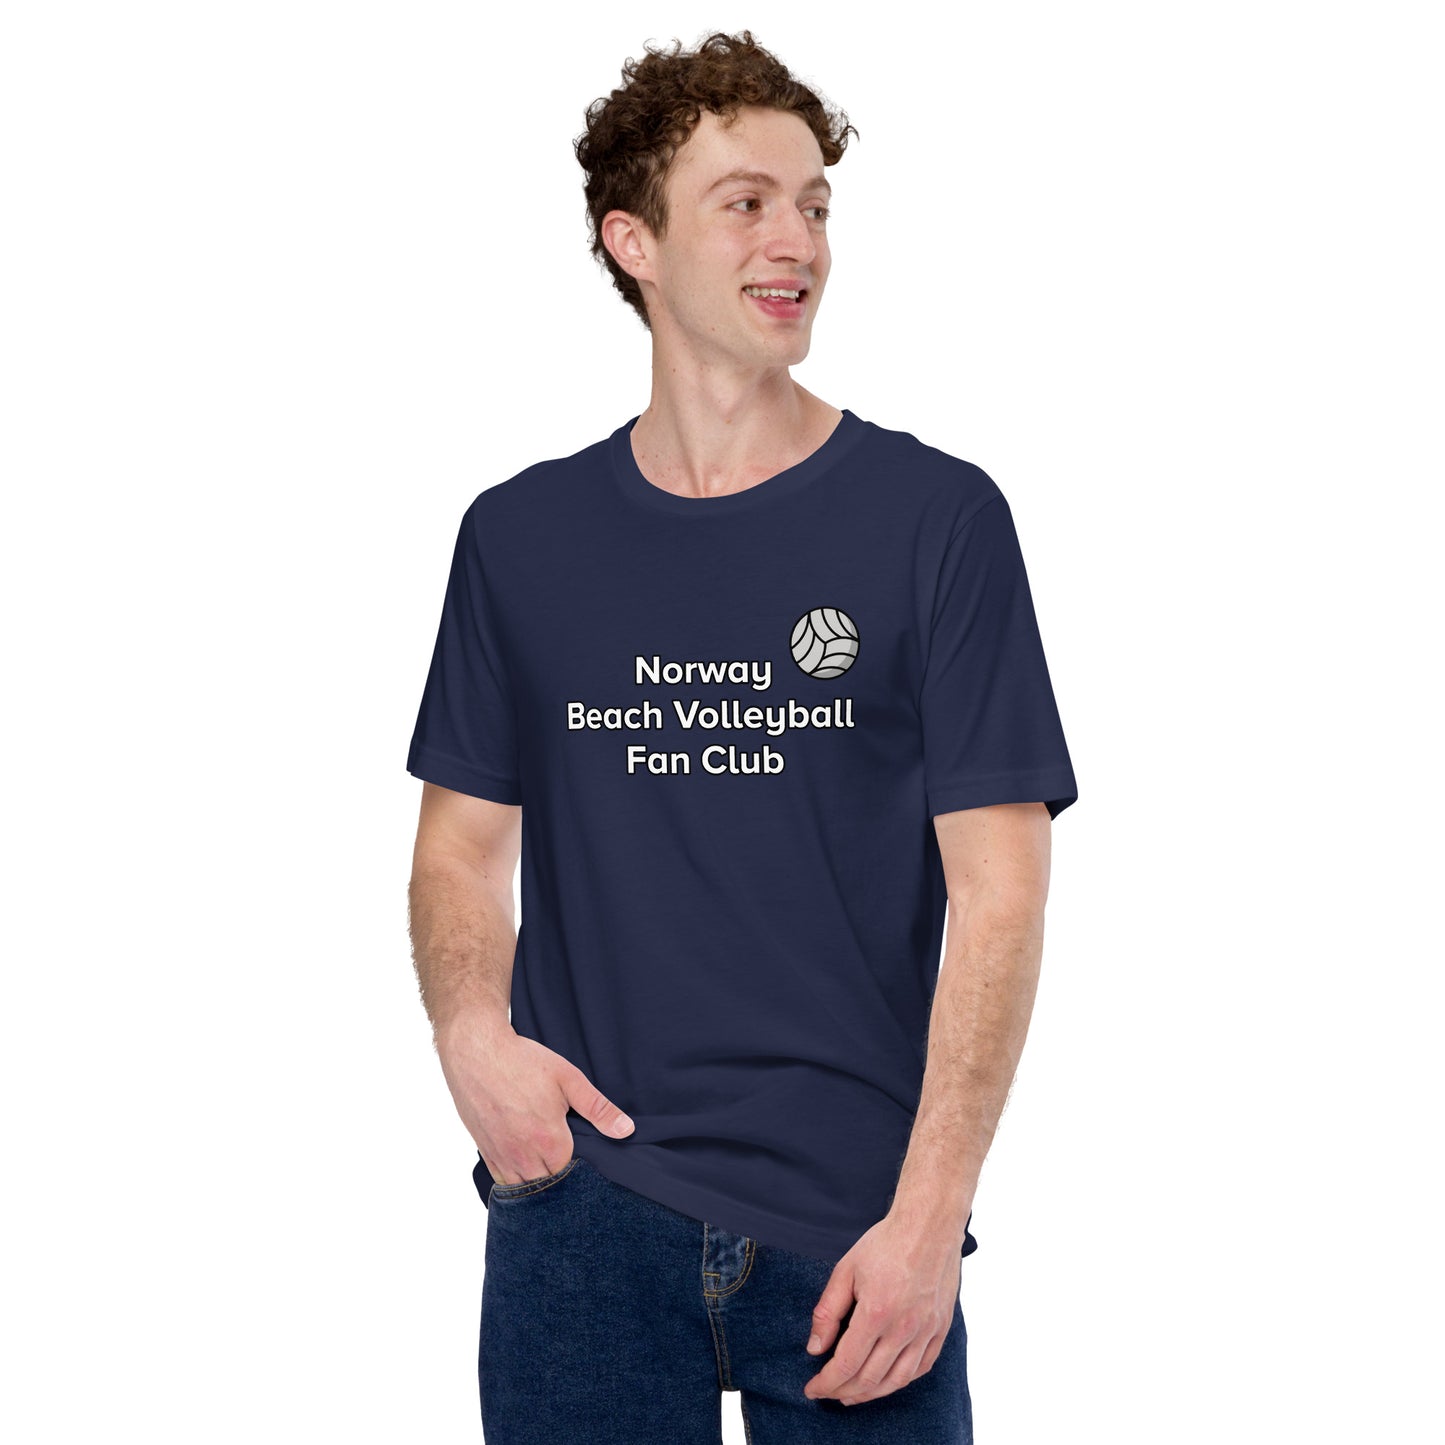 'Norway Beach Volleyball Fan Club' T-shirt